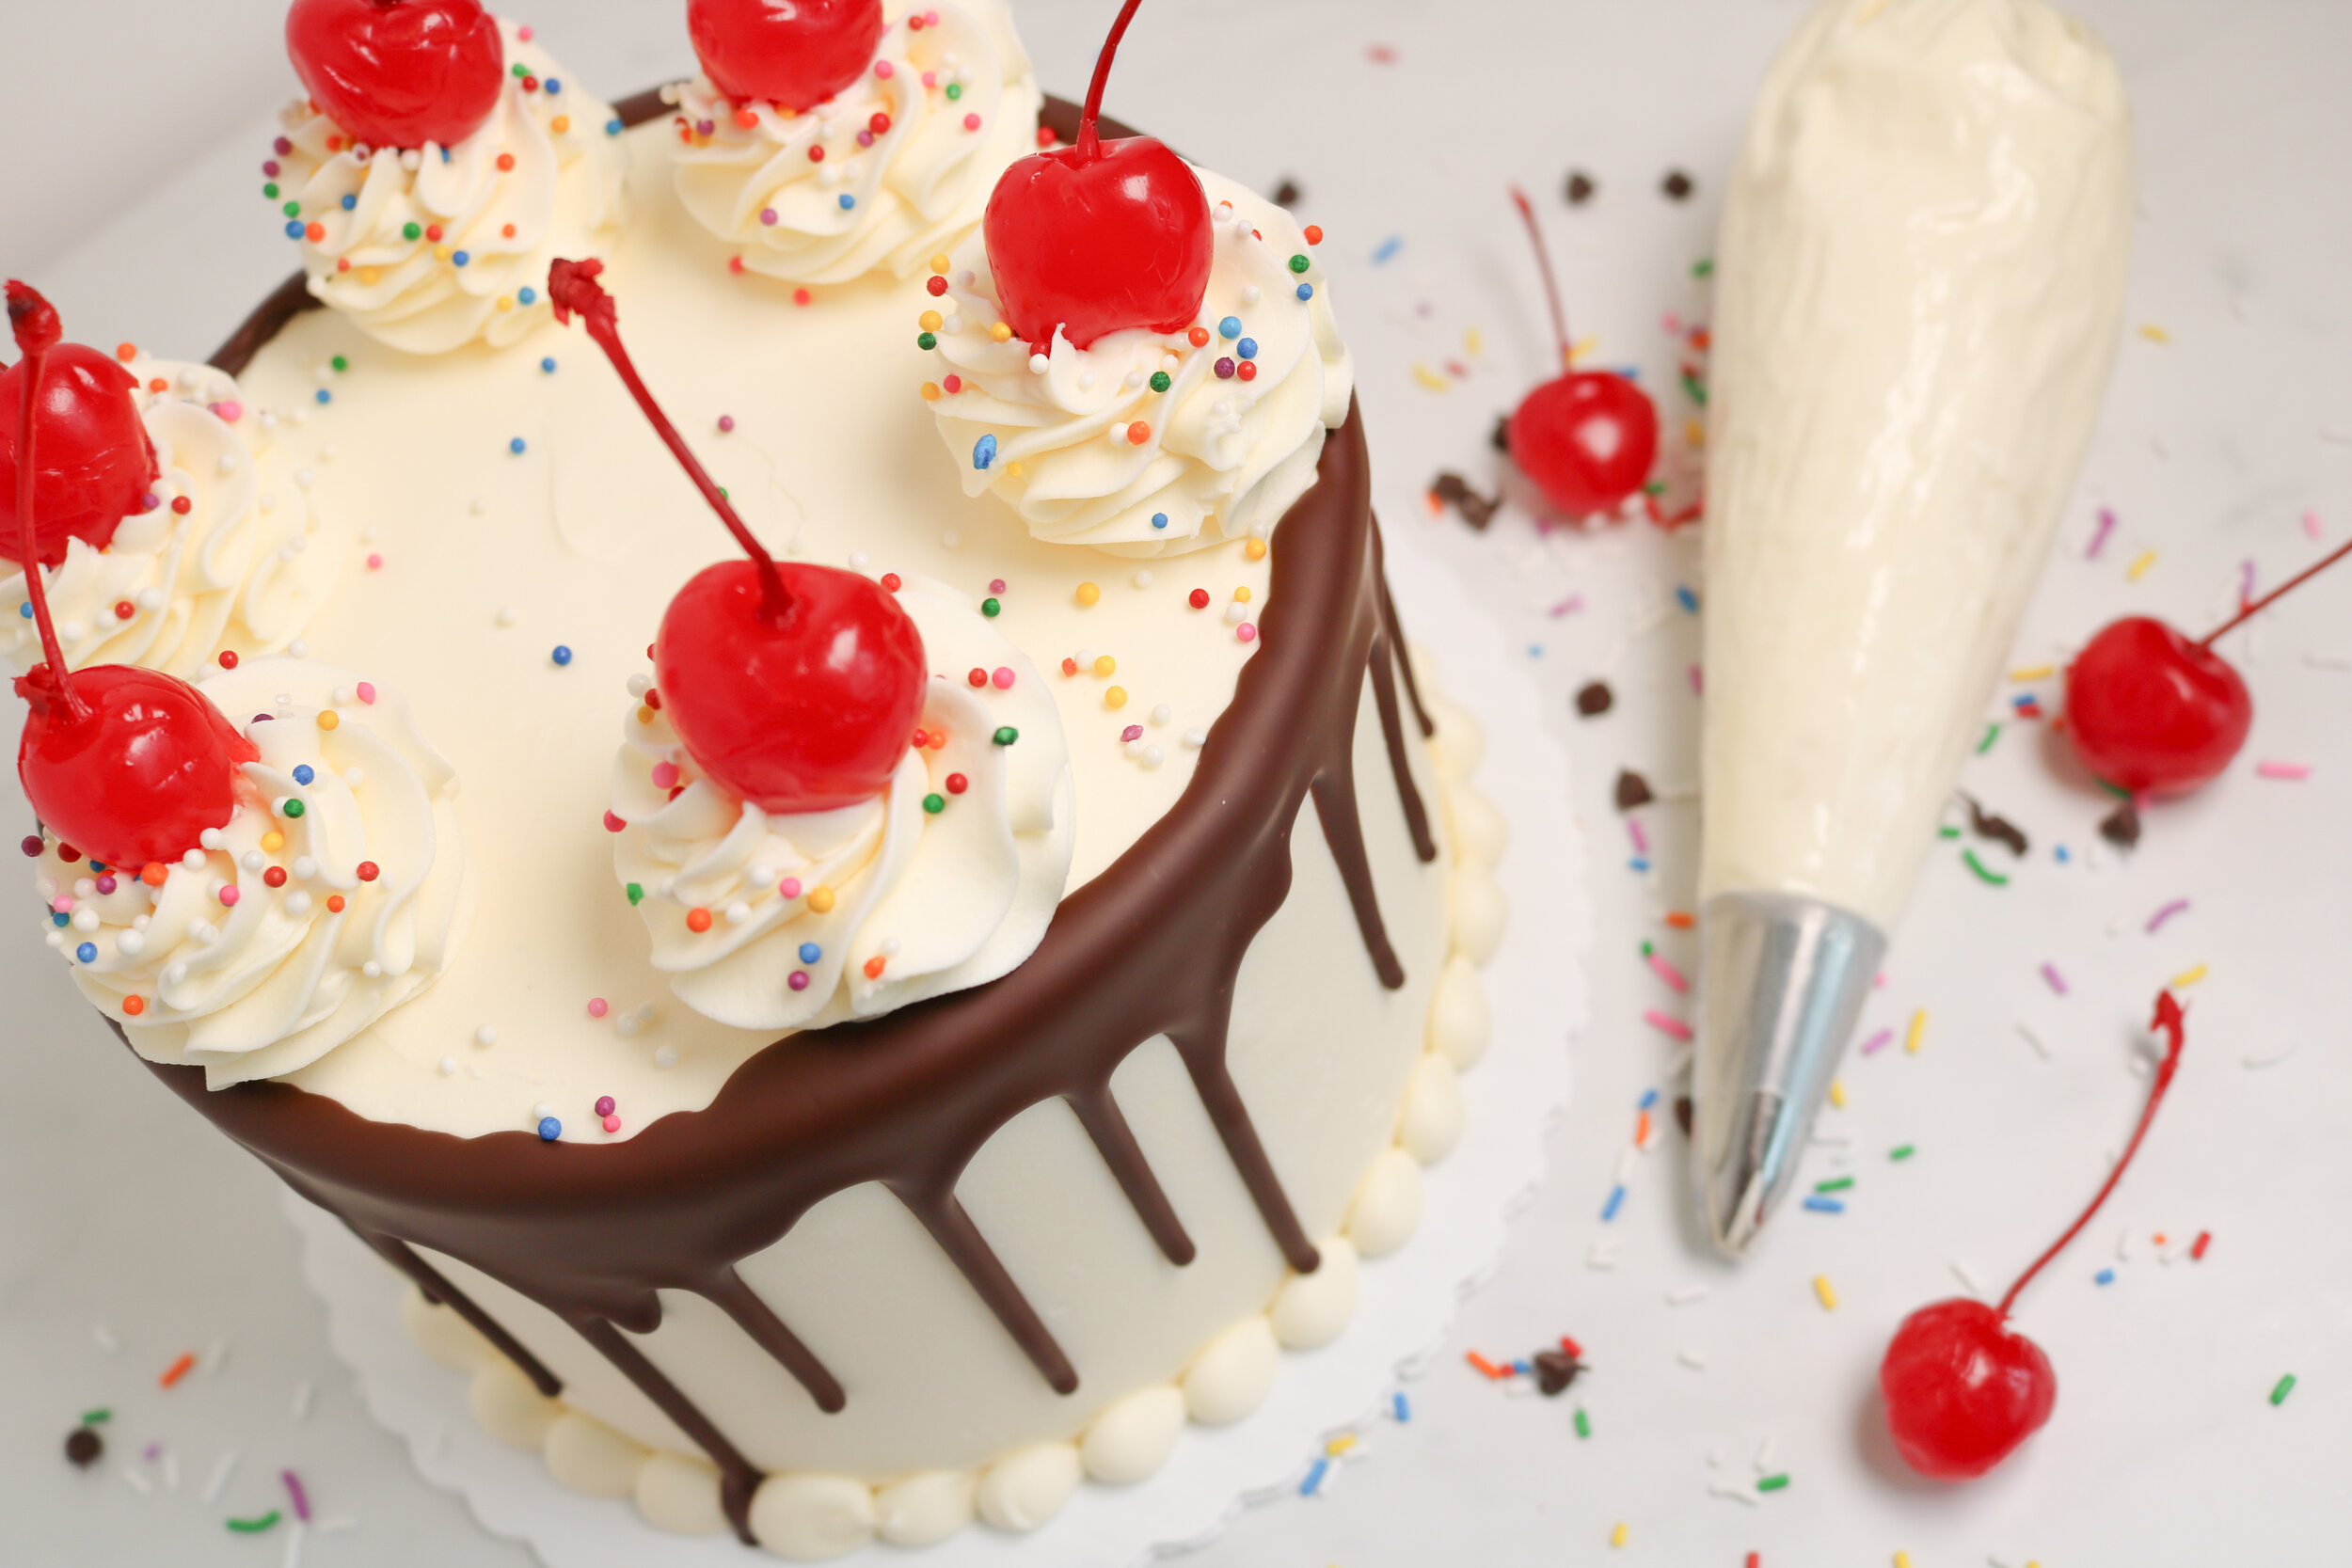 Contact 1 — Happycakes Cupcakes & More